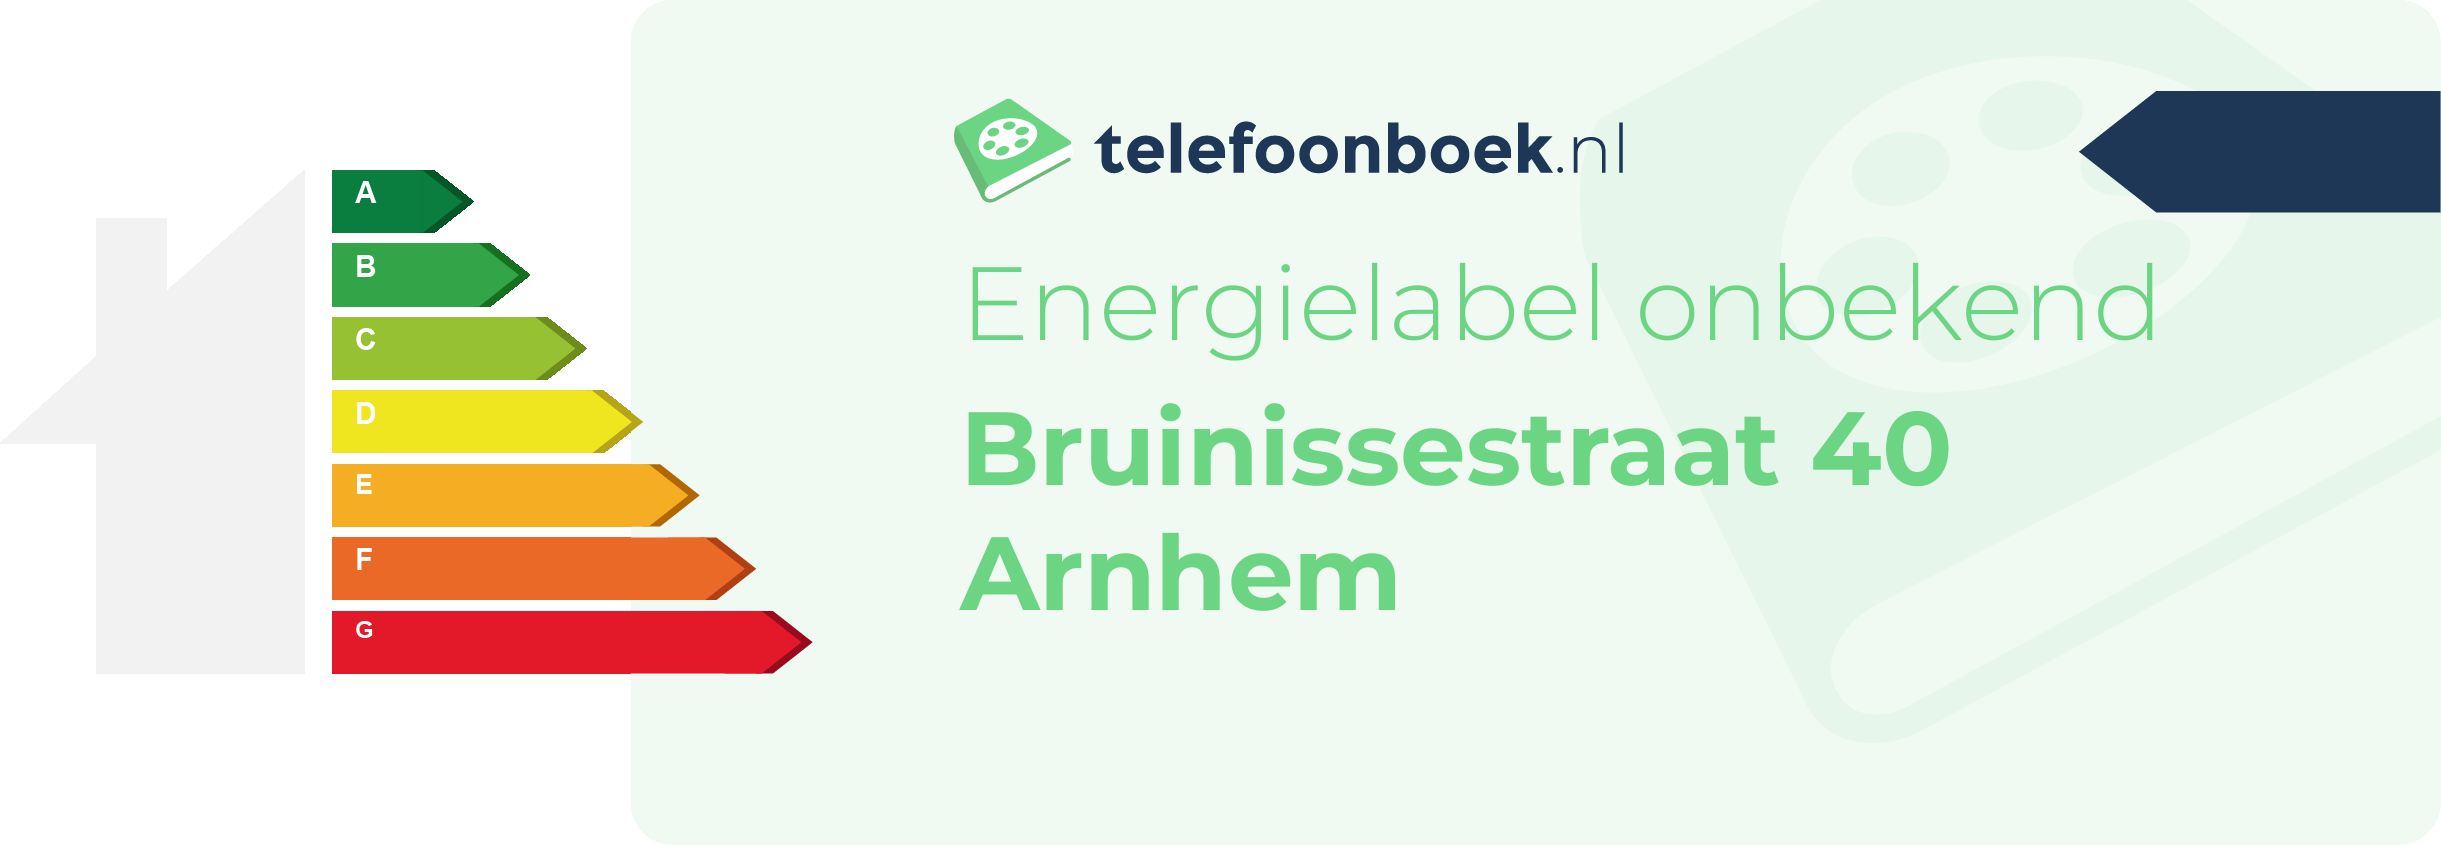 Energielabel Bruinissestraat 40 Arnhem